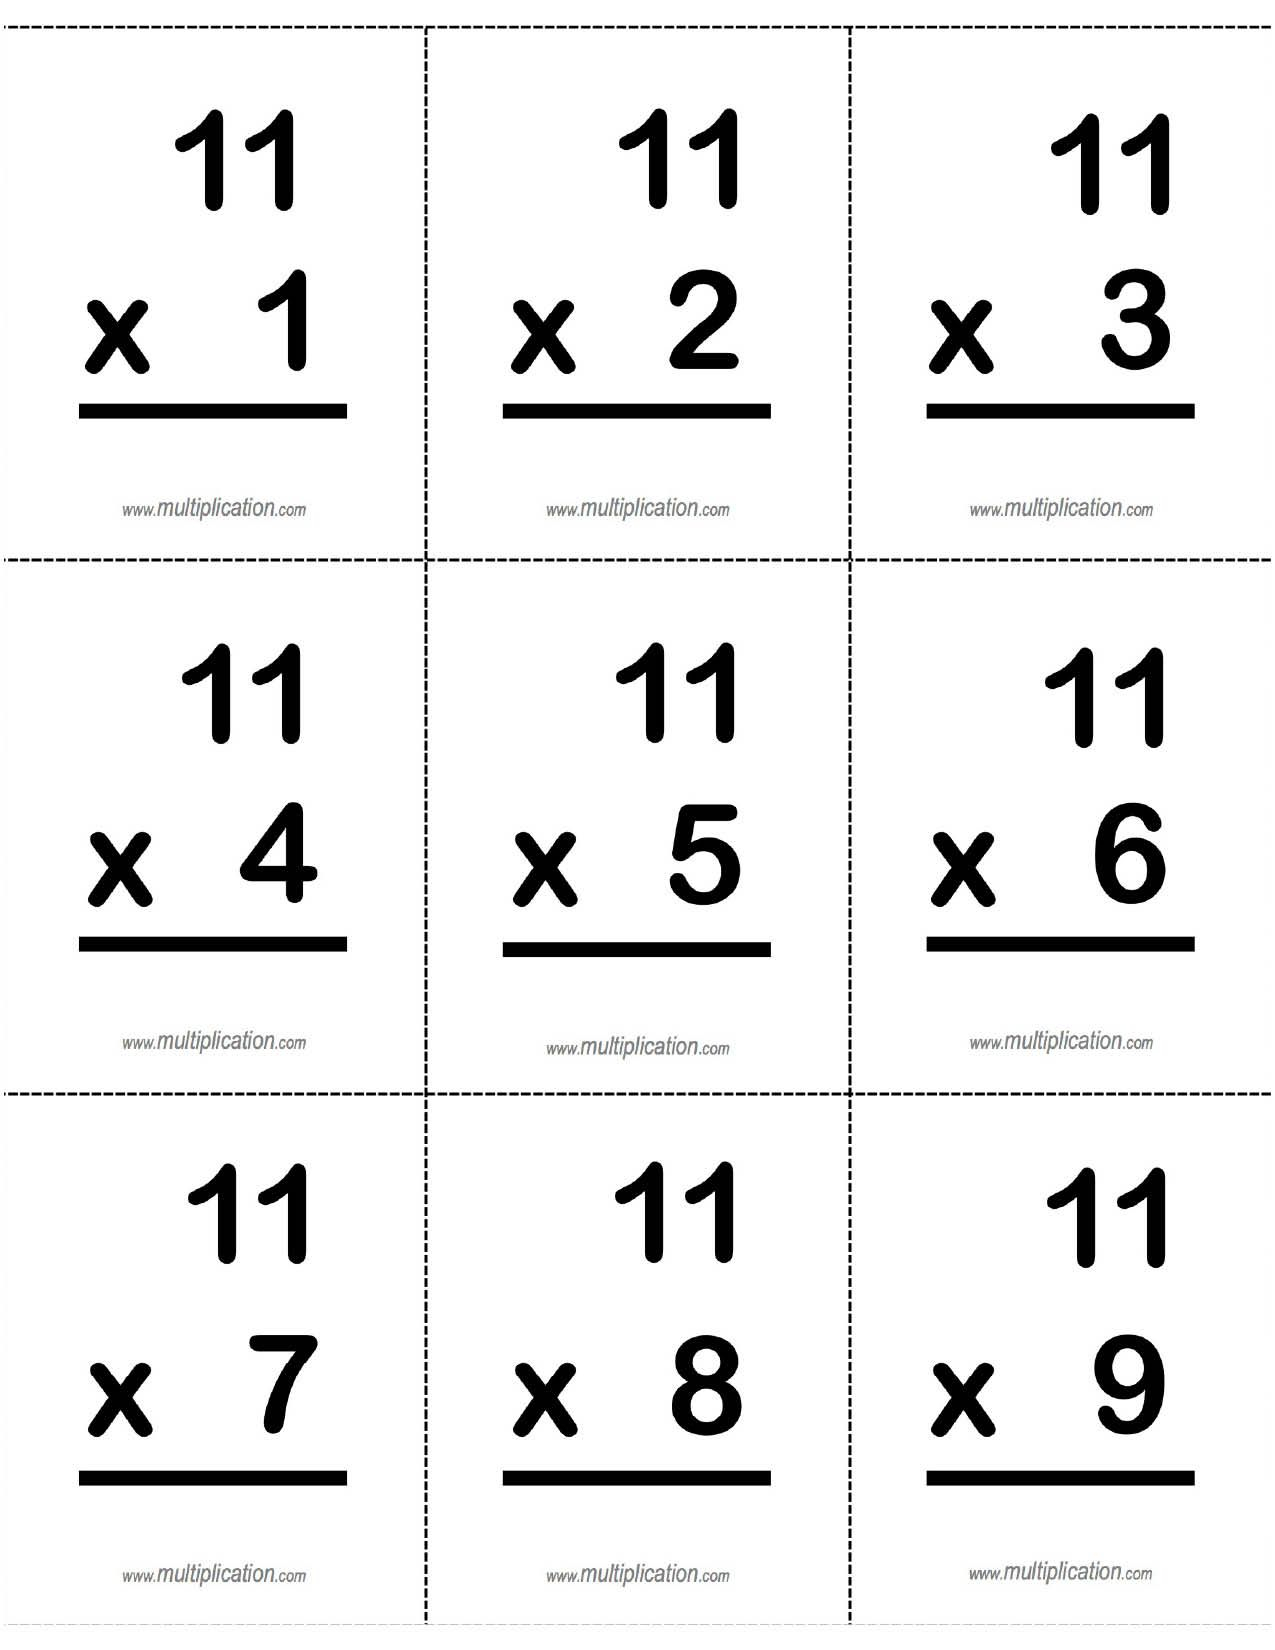 multiplication-printable-flash-cards